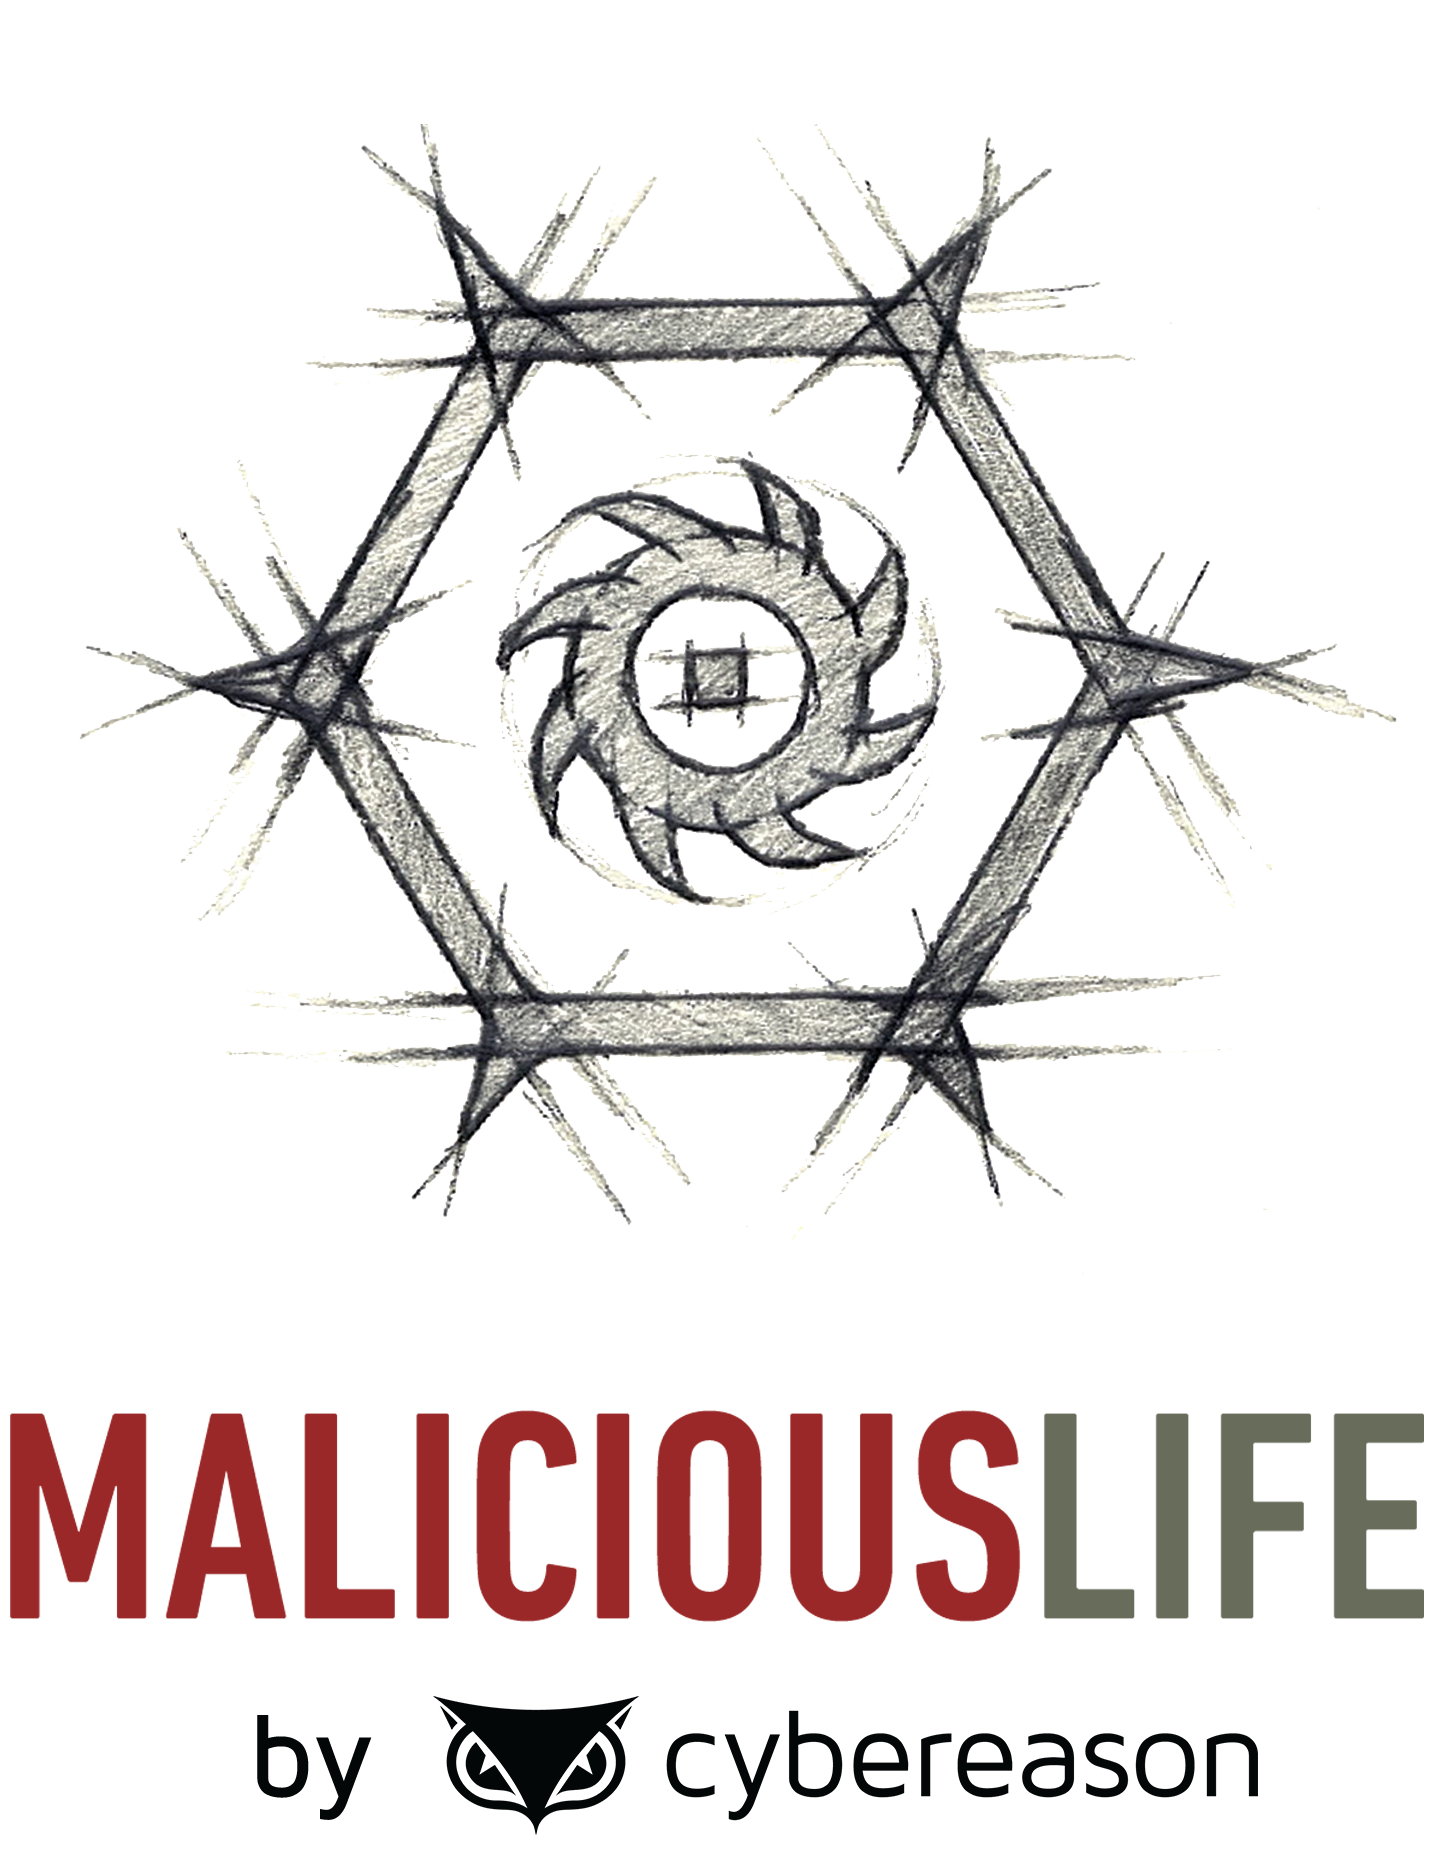 Malicious Life